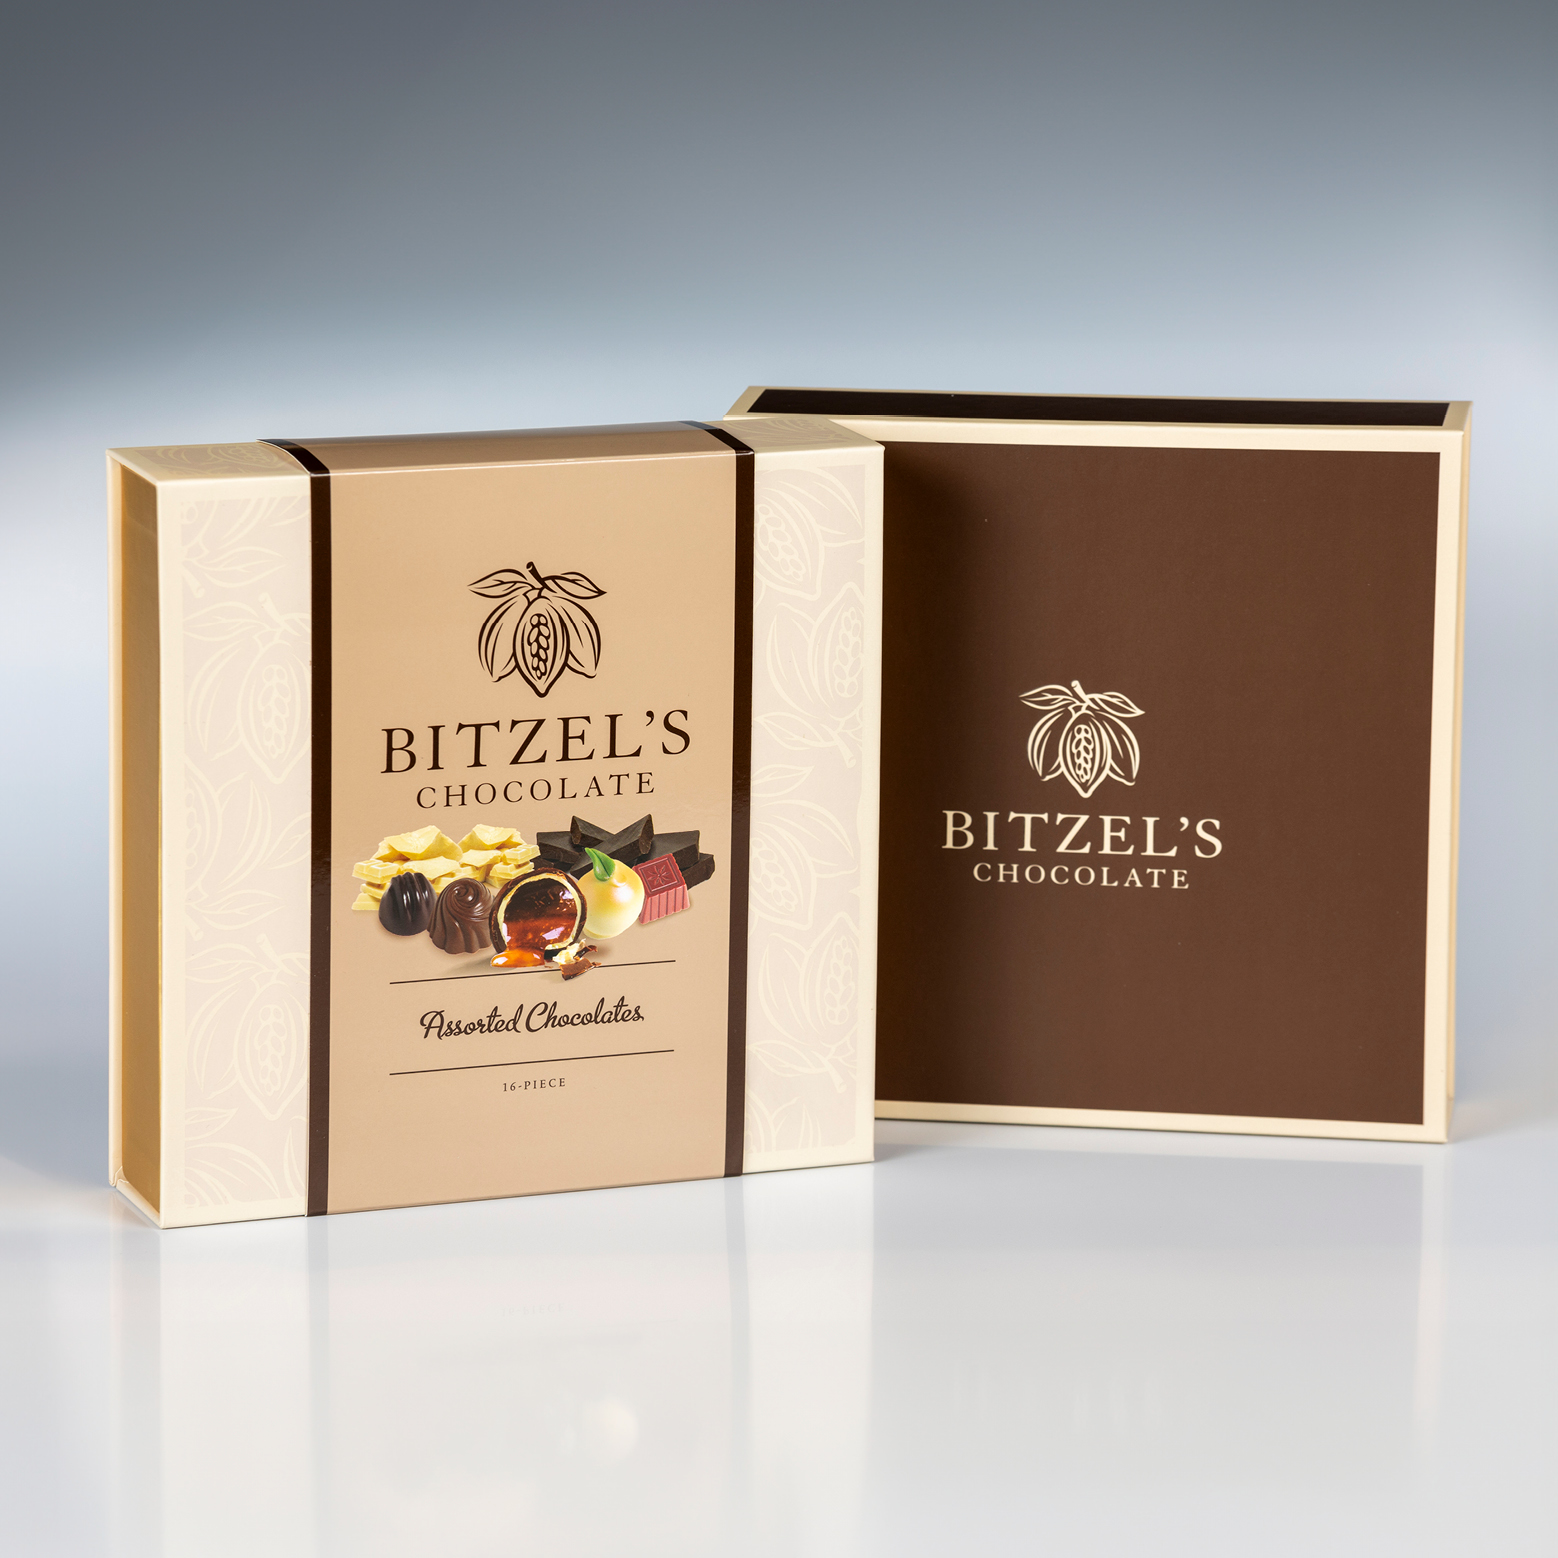 Bitzel’s Chocolate